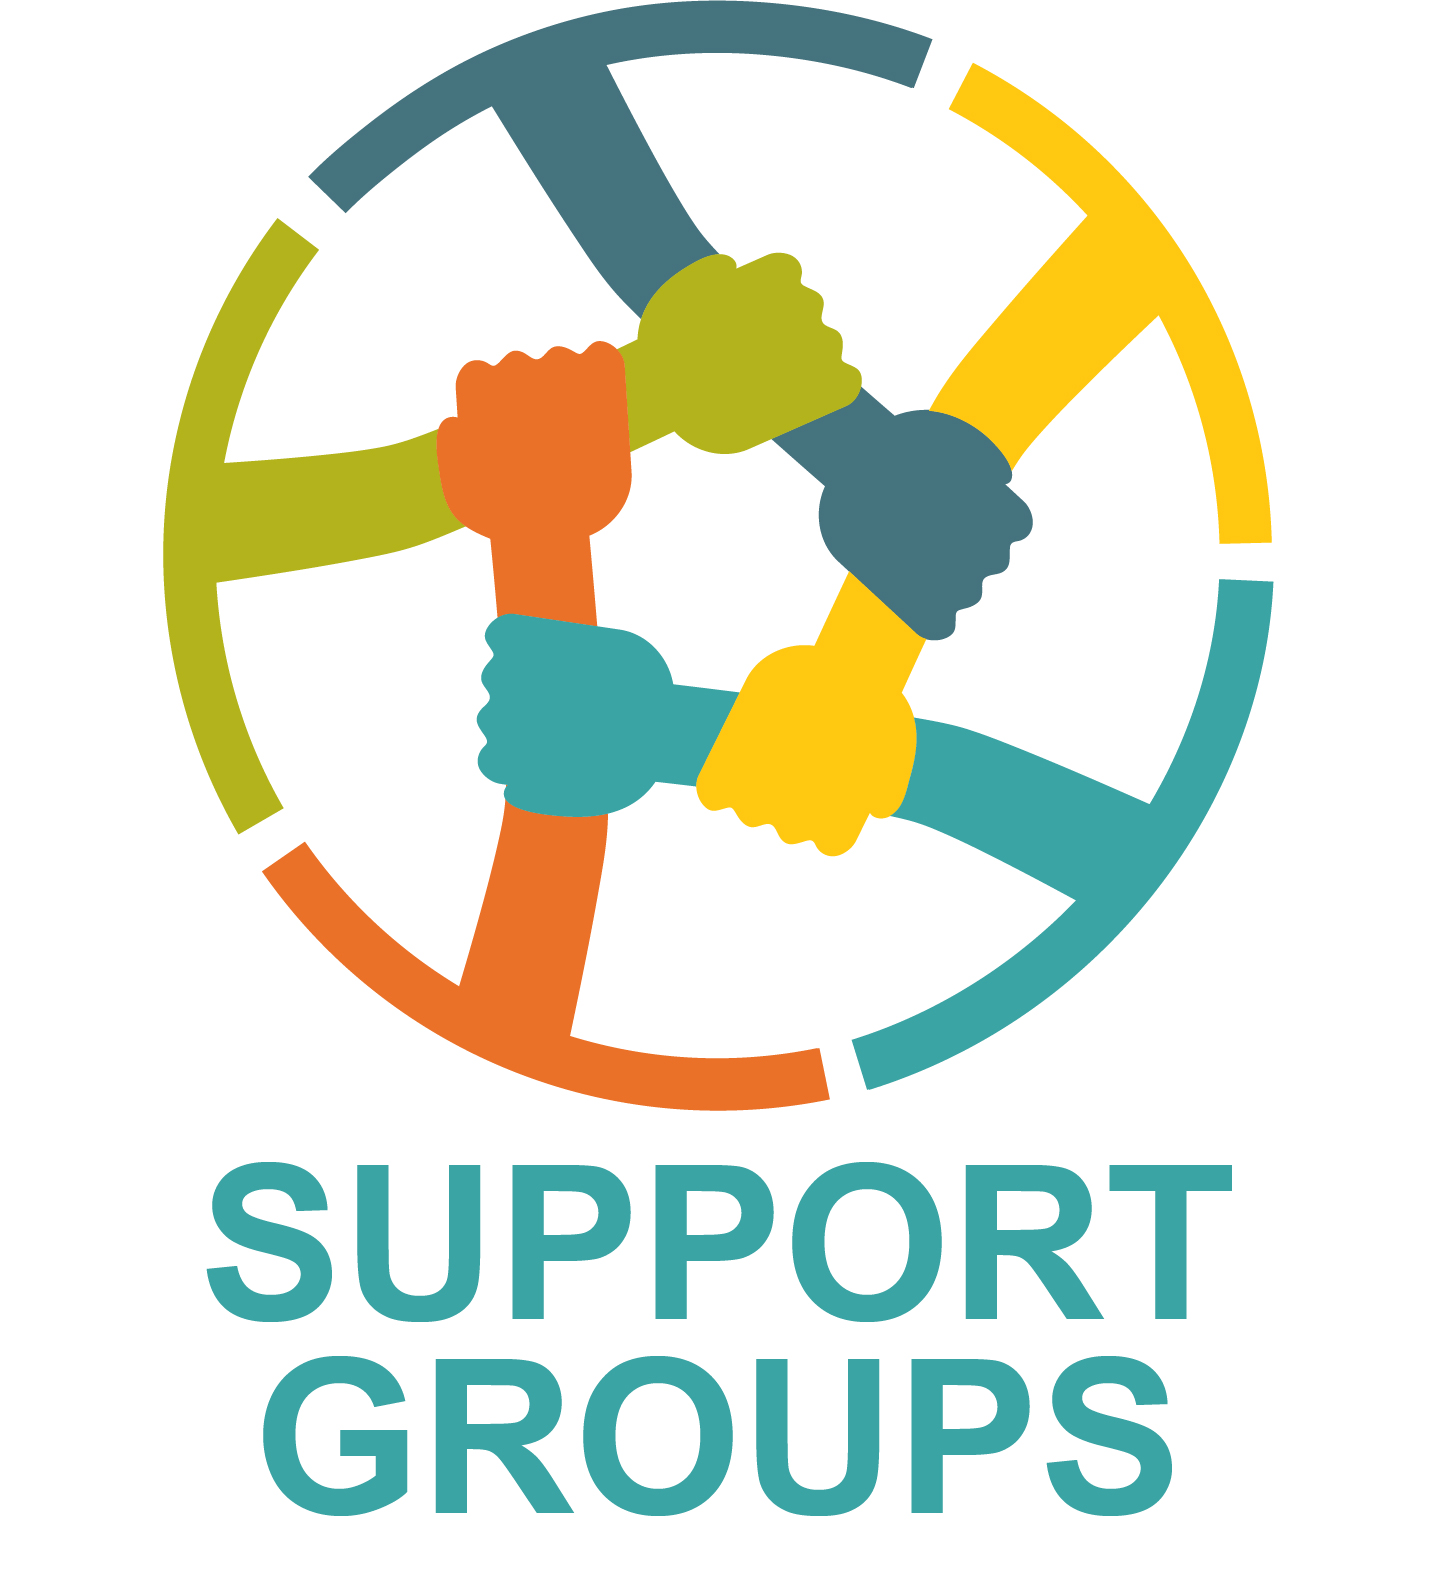 Support groups logo - Sewickley Presbyterian